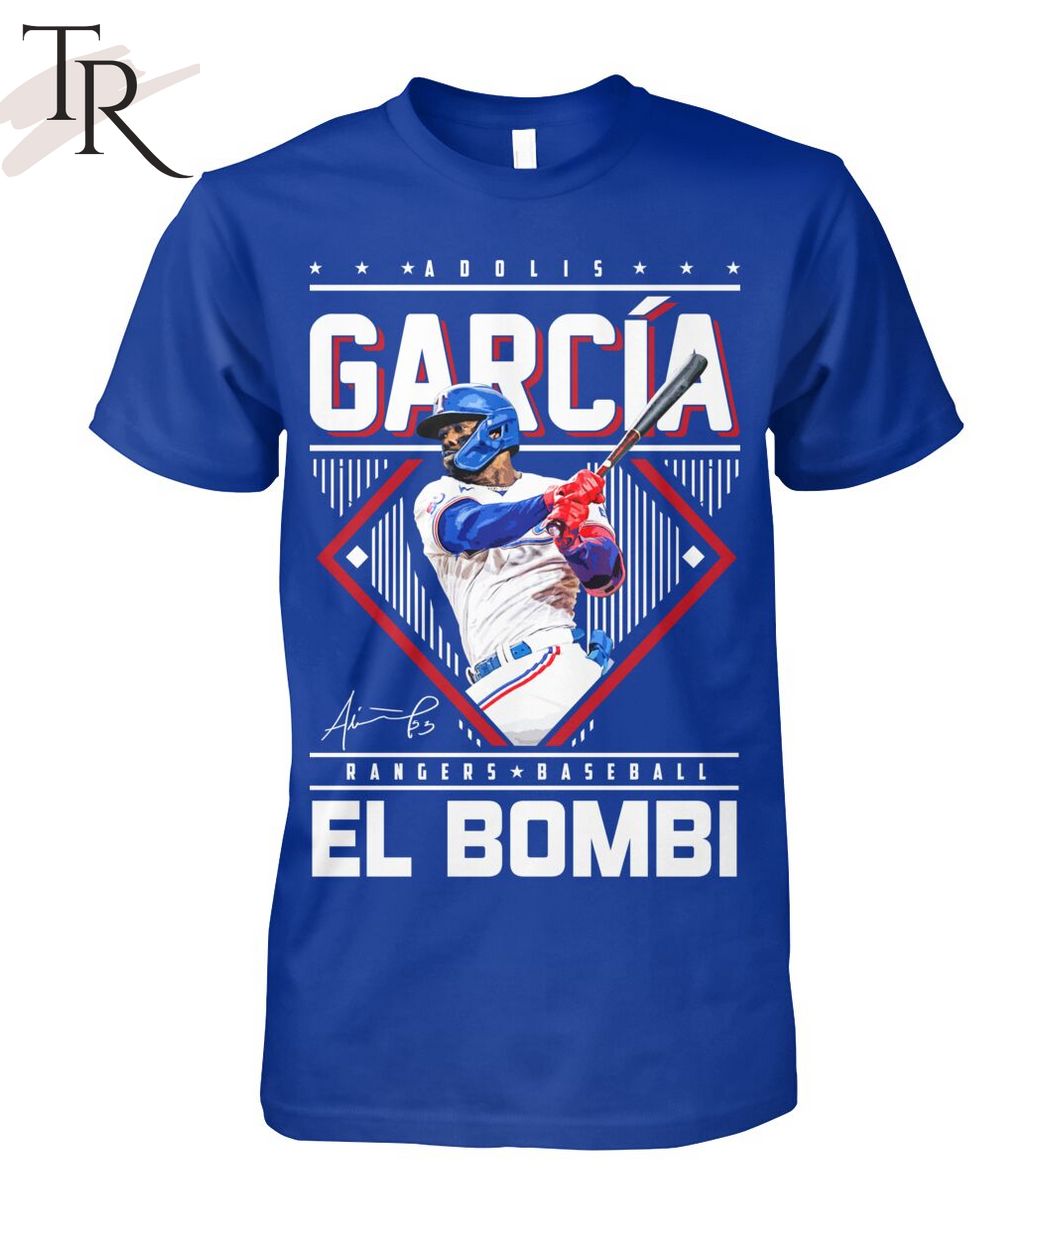 Garcia Rangers Baseball El Bombi T-Shirt - Torunstyle